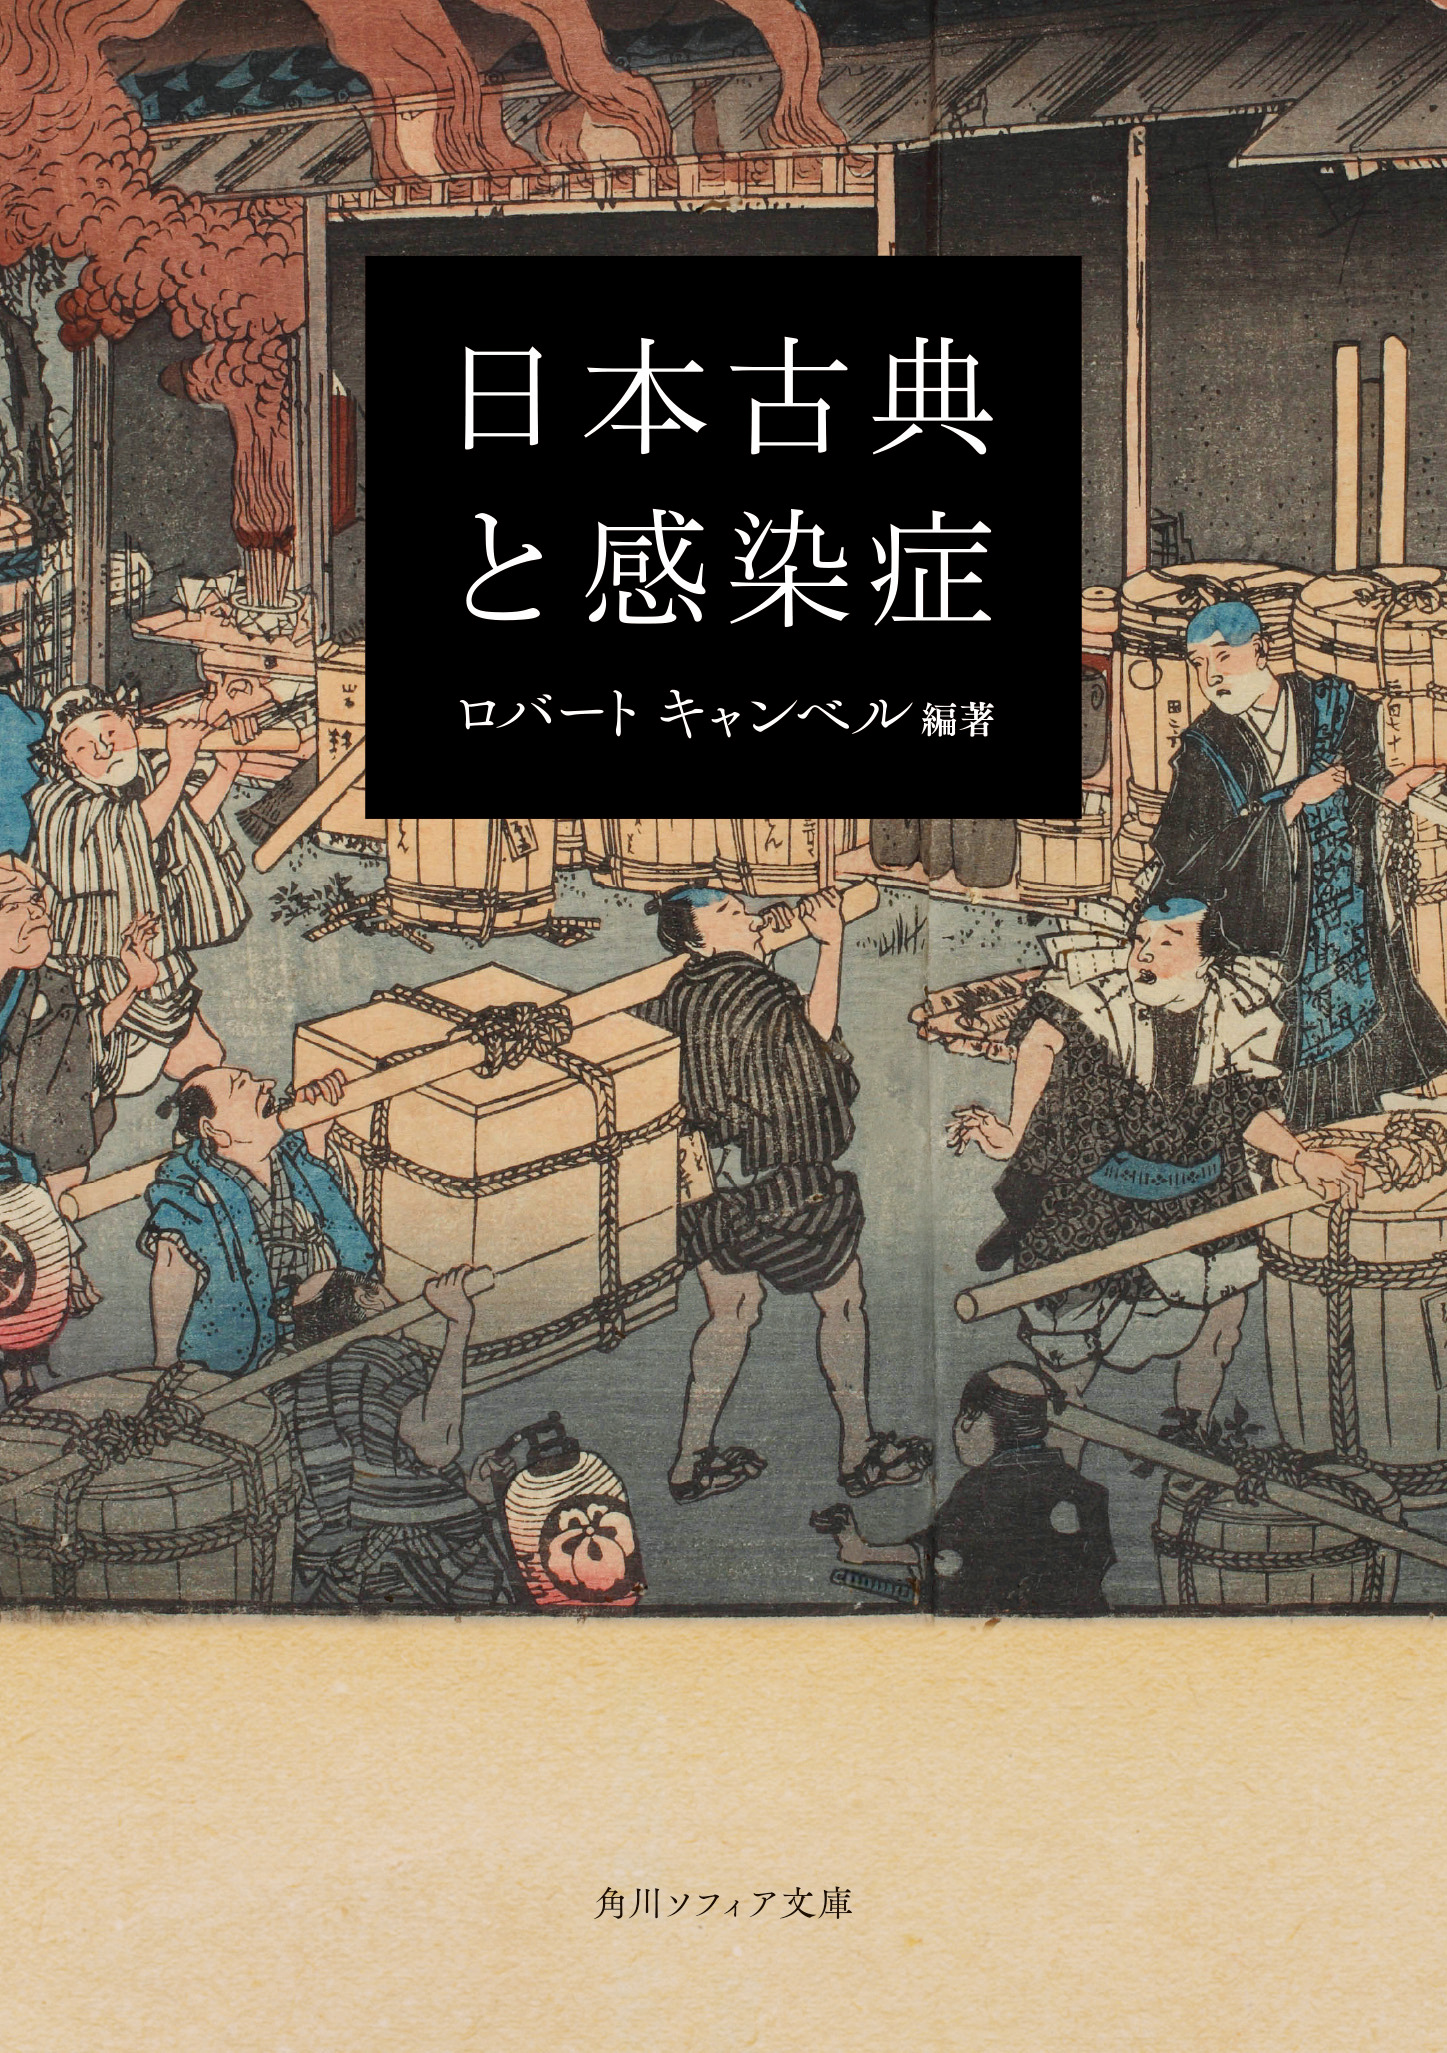 An Ukiyoe illustration of Edo period scene during a cholera pandemic